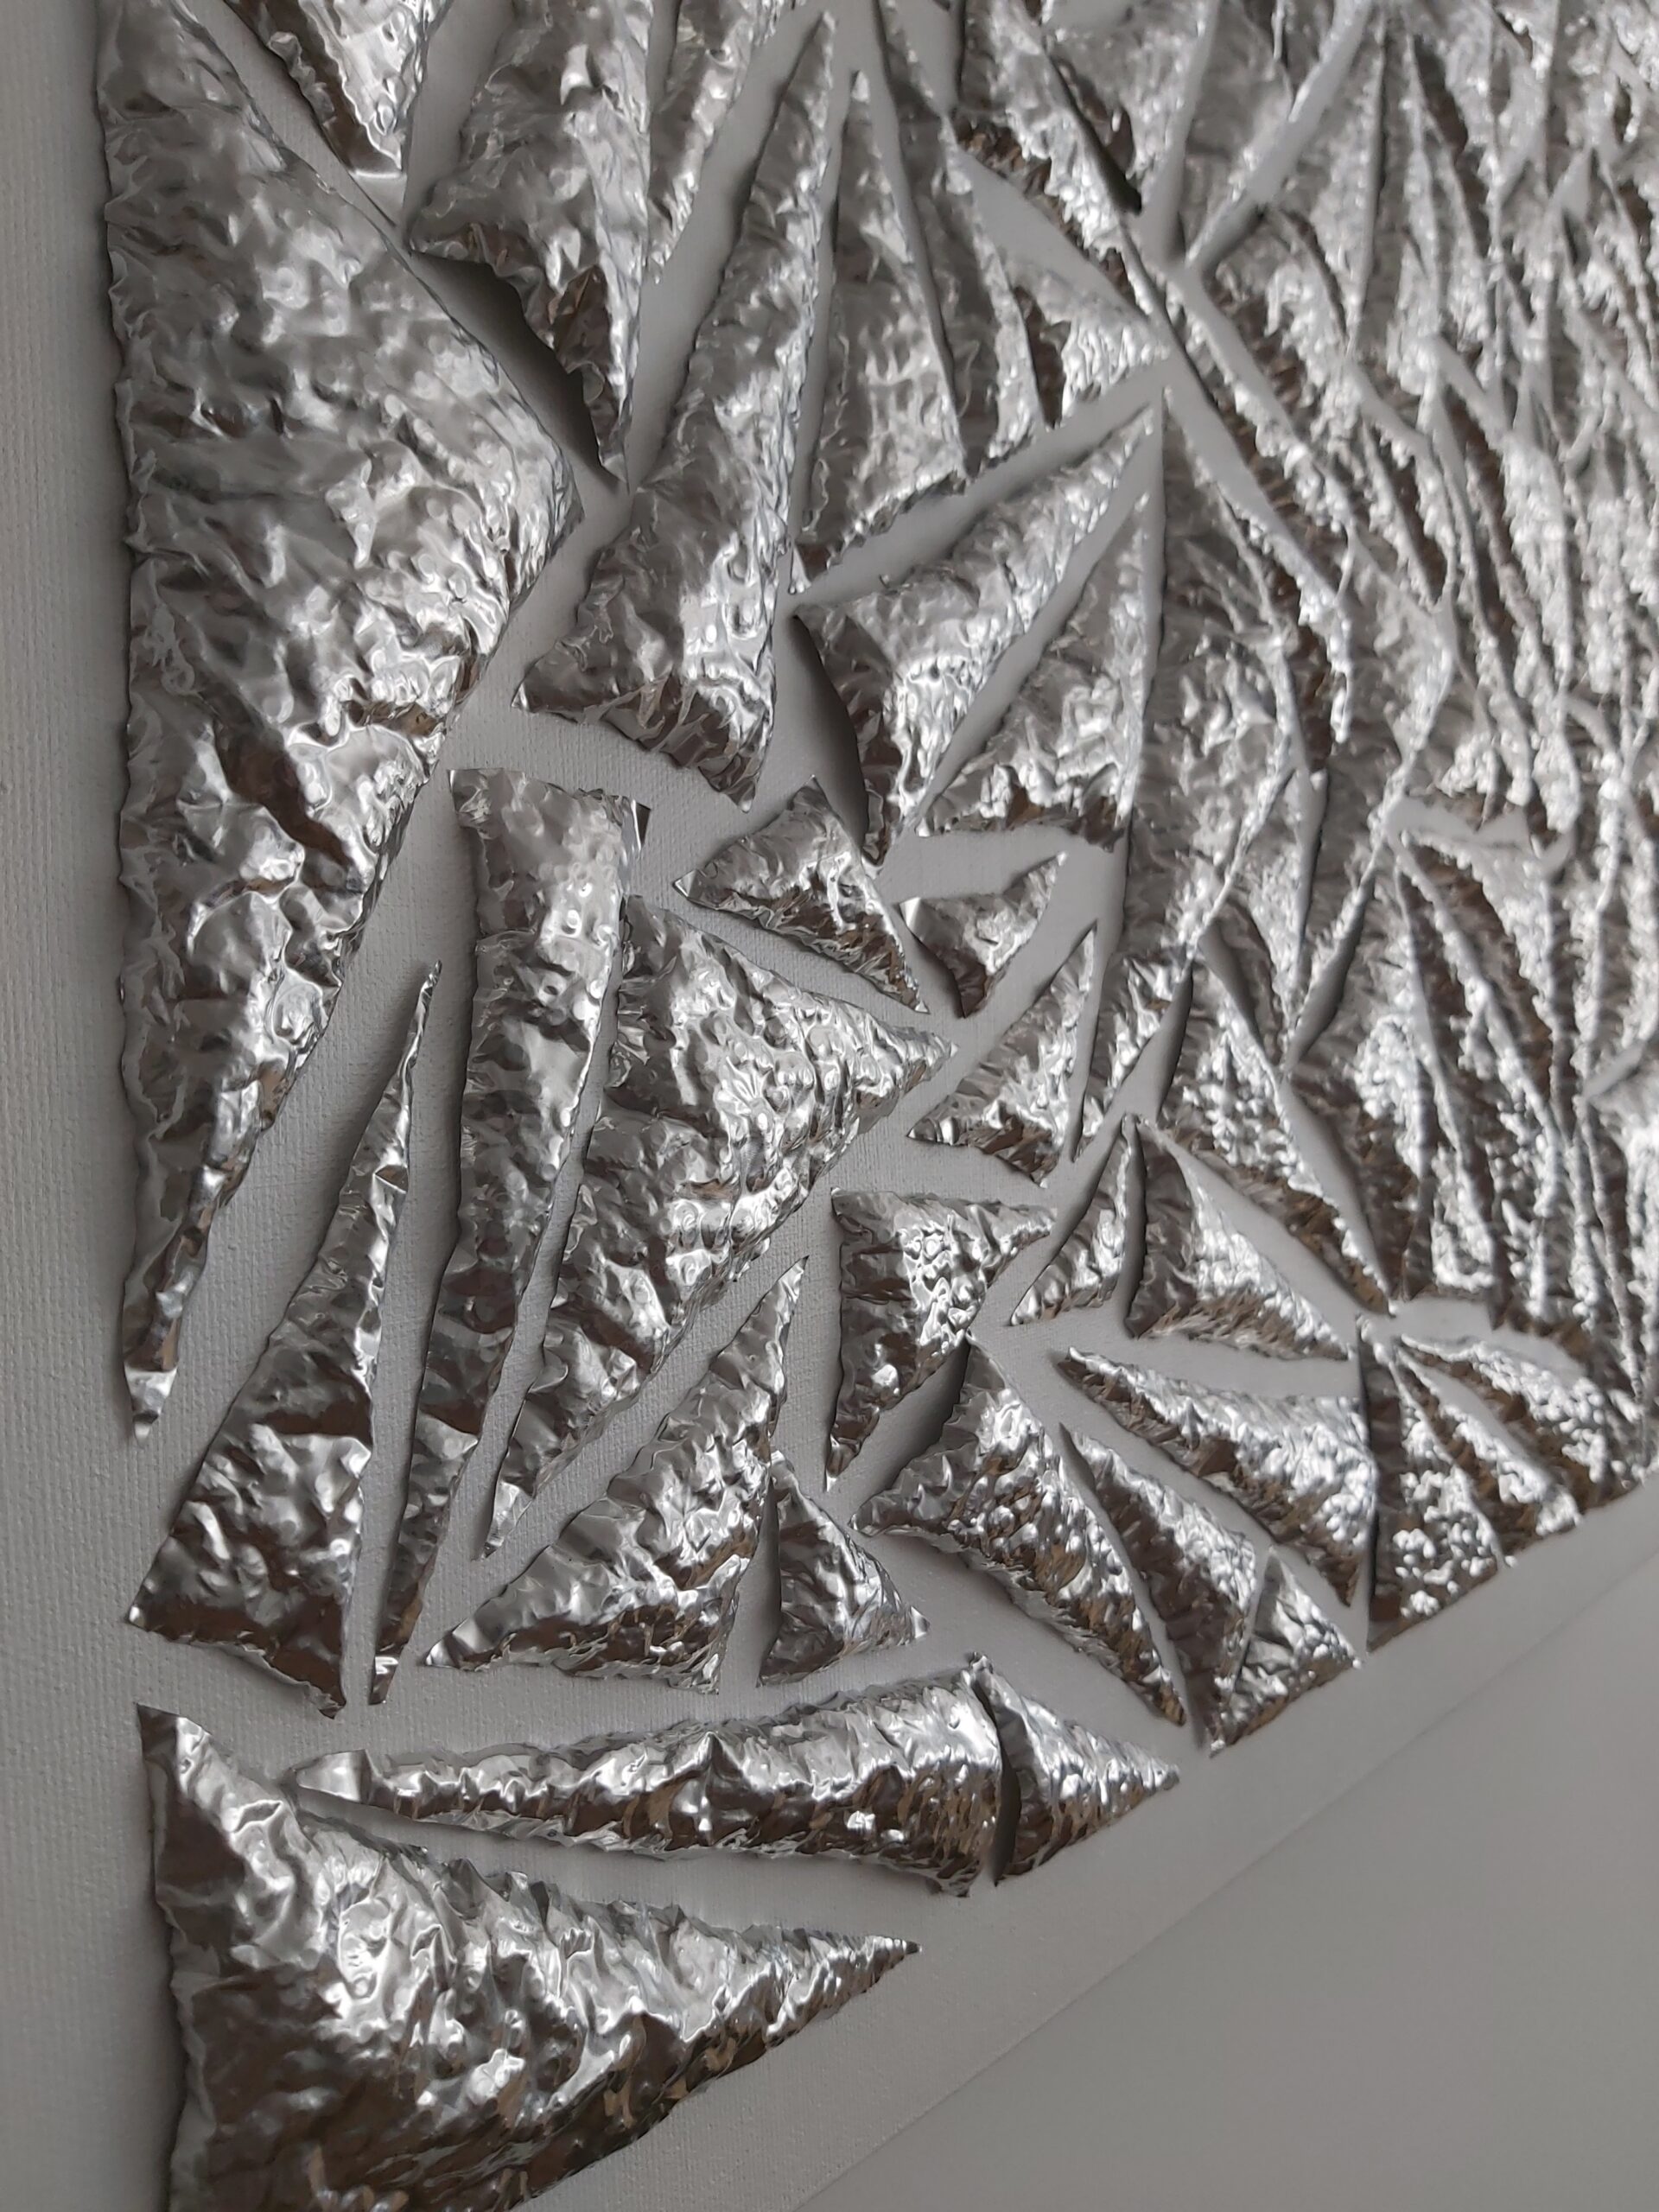 Close up of beaten aluminium pieces by Richard Noel artist